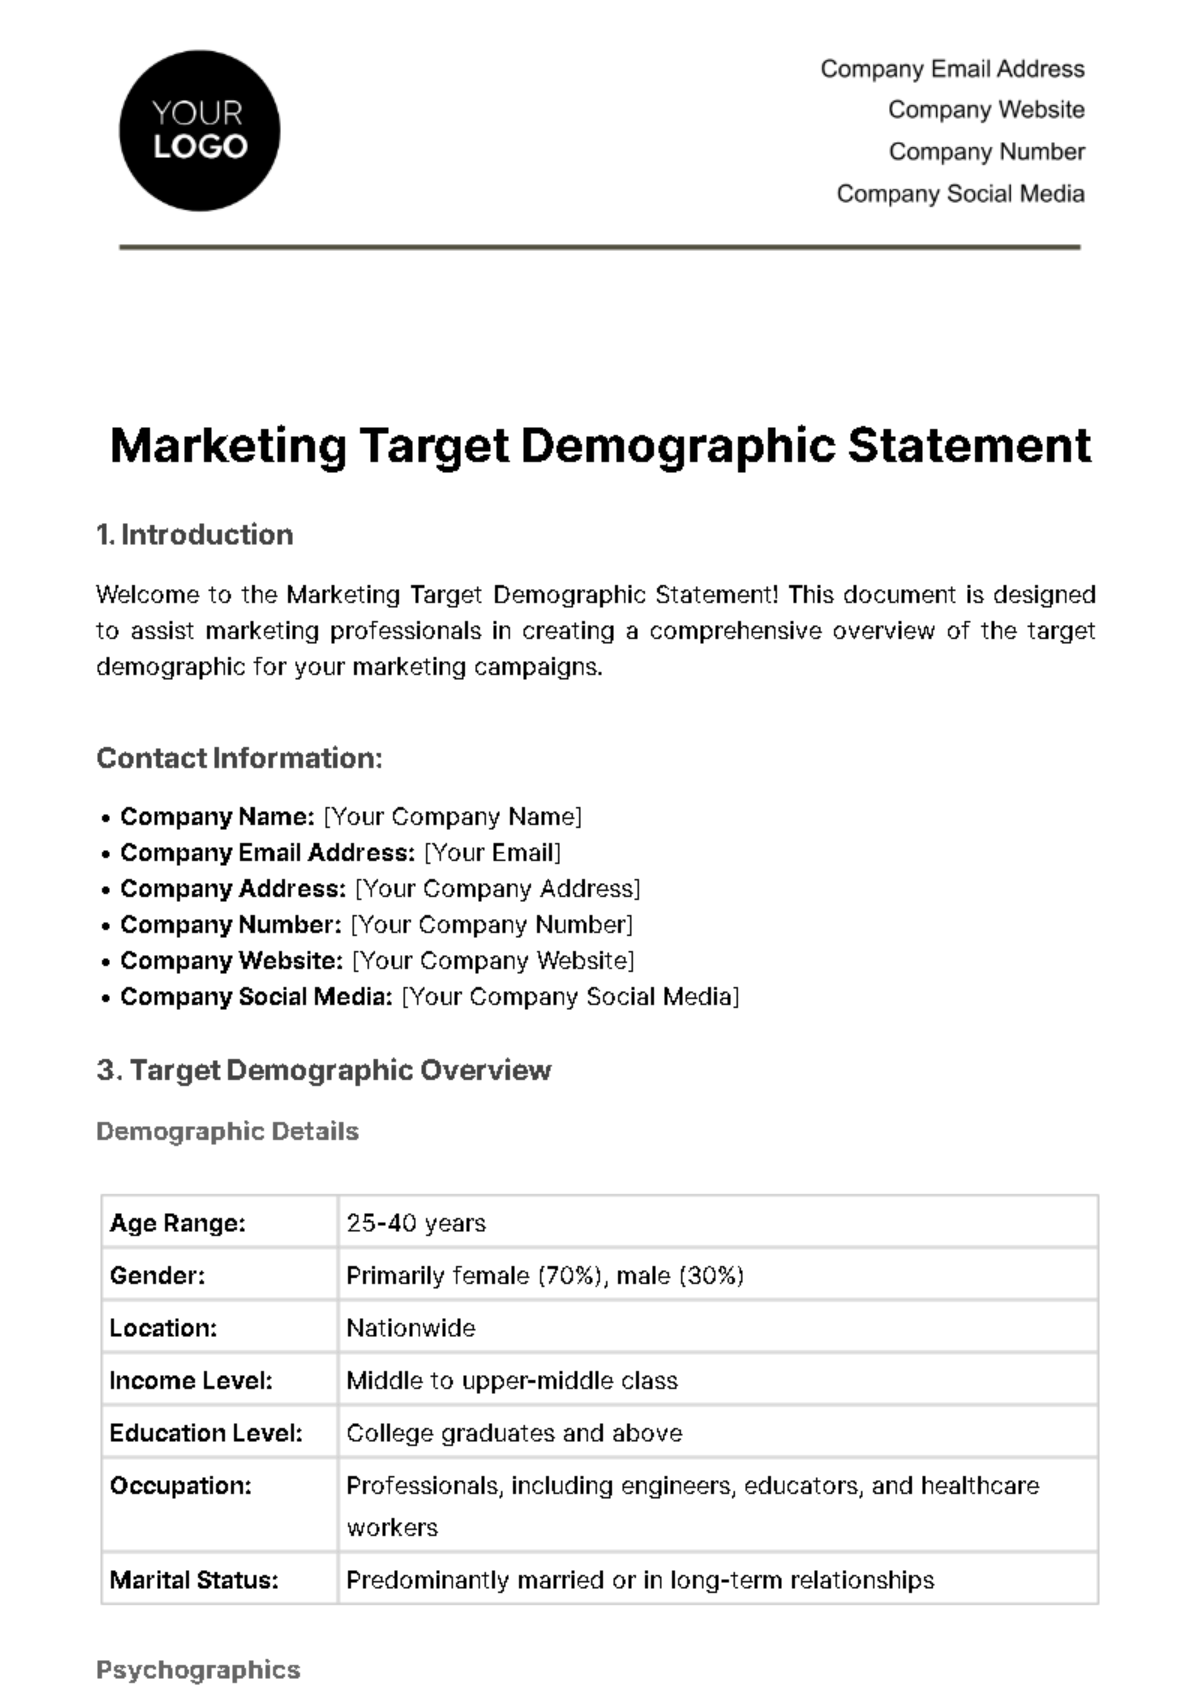 Marketing Target Demographic Statement Template